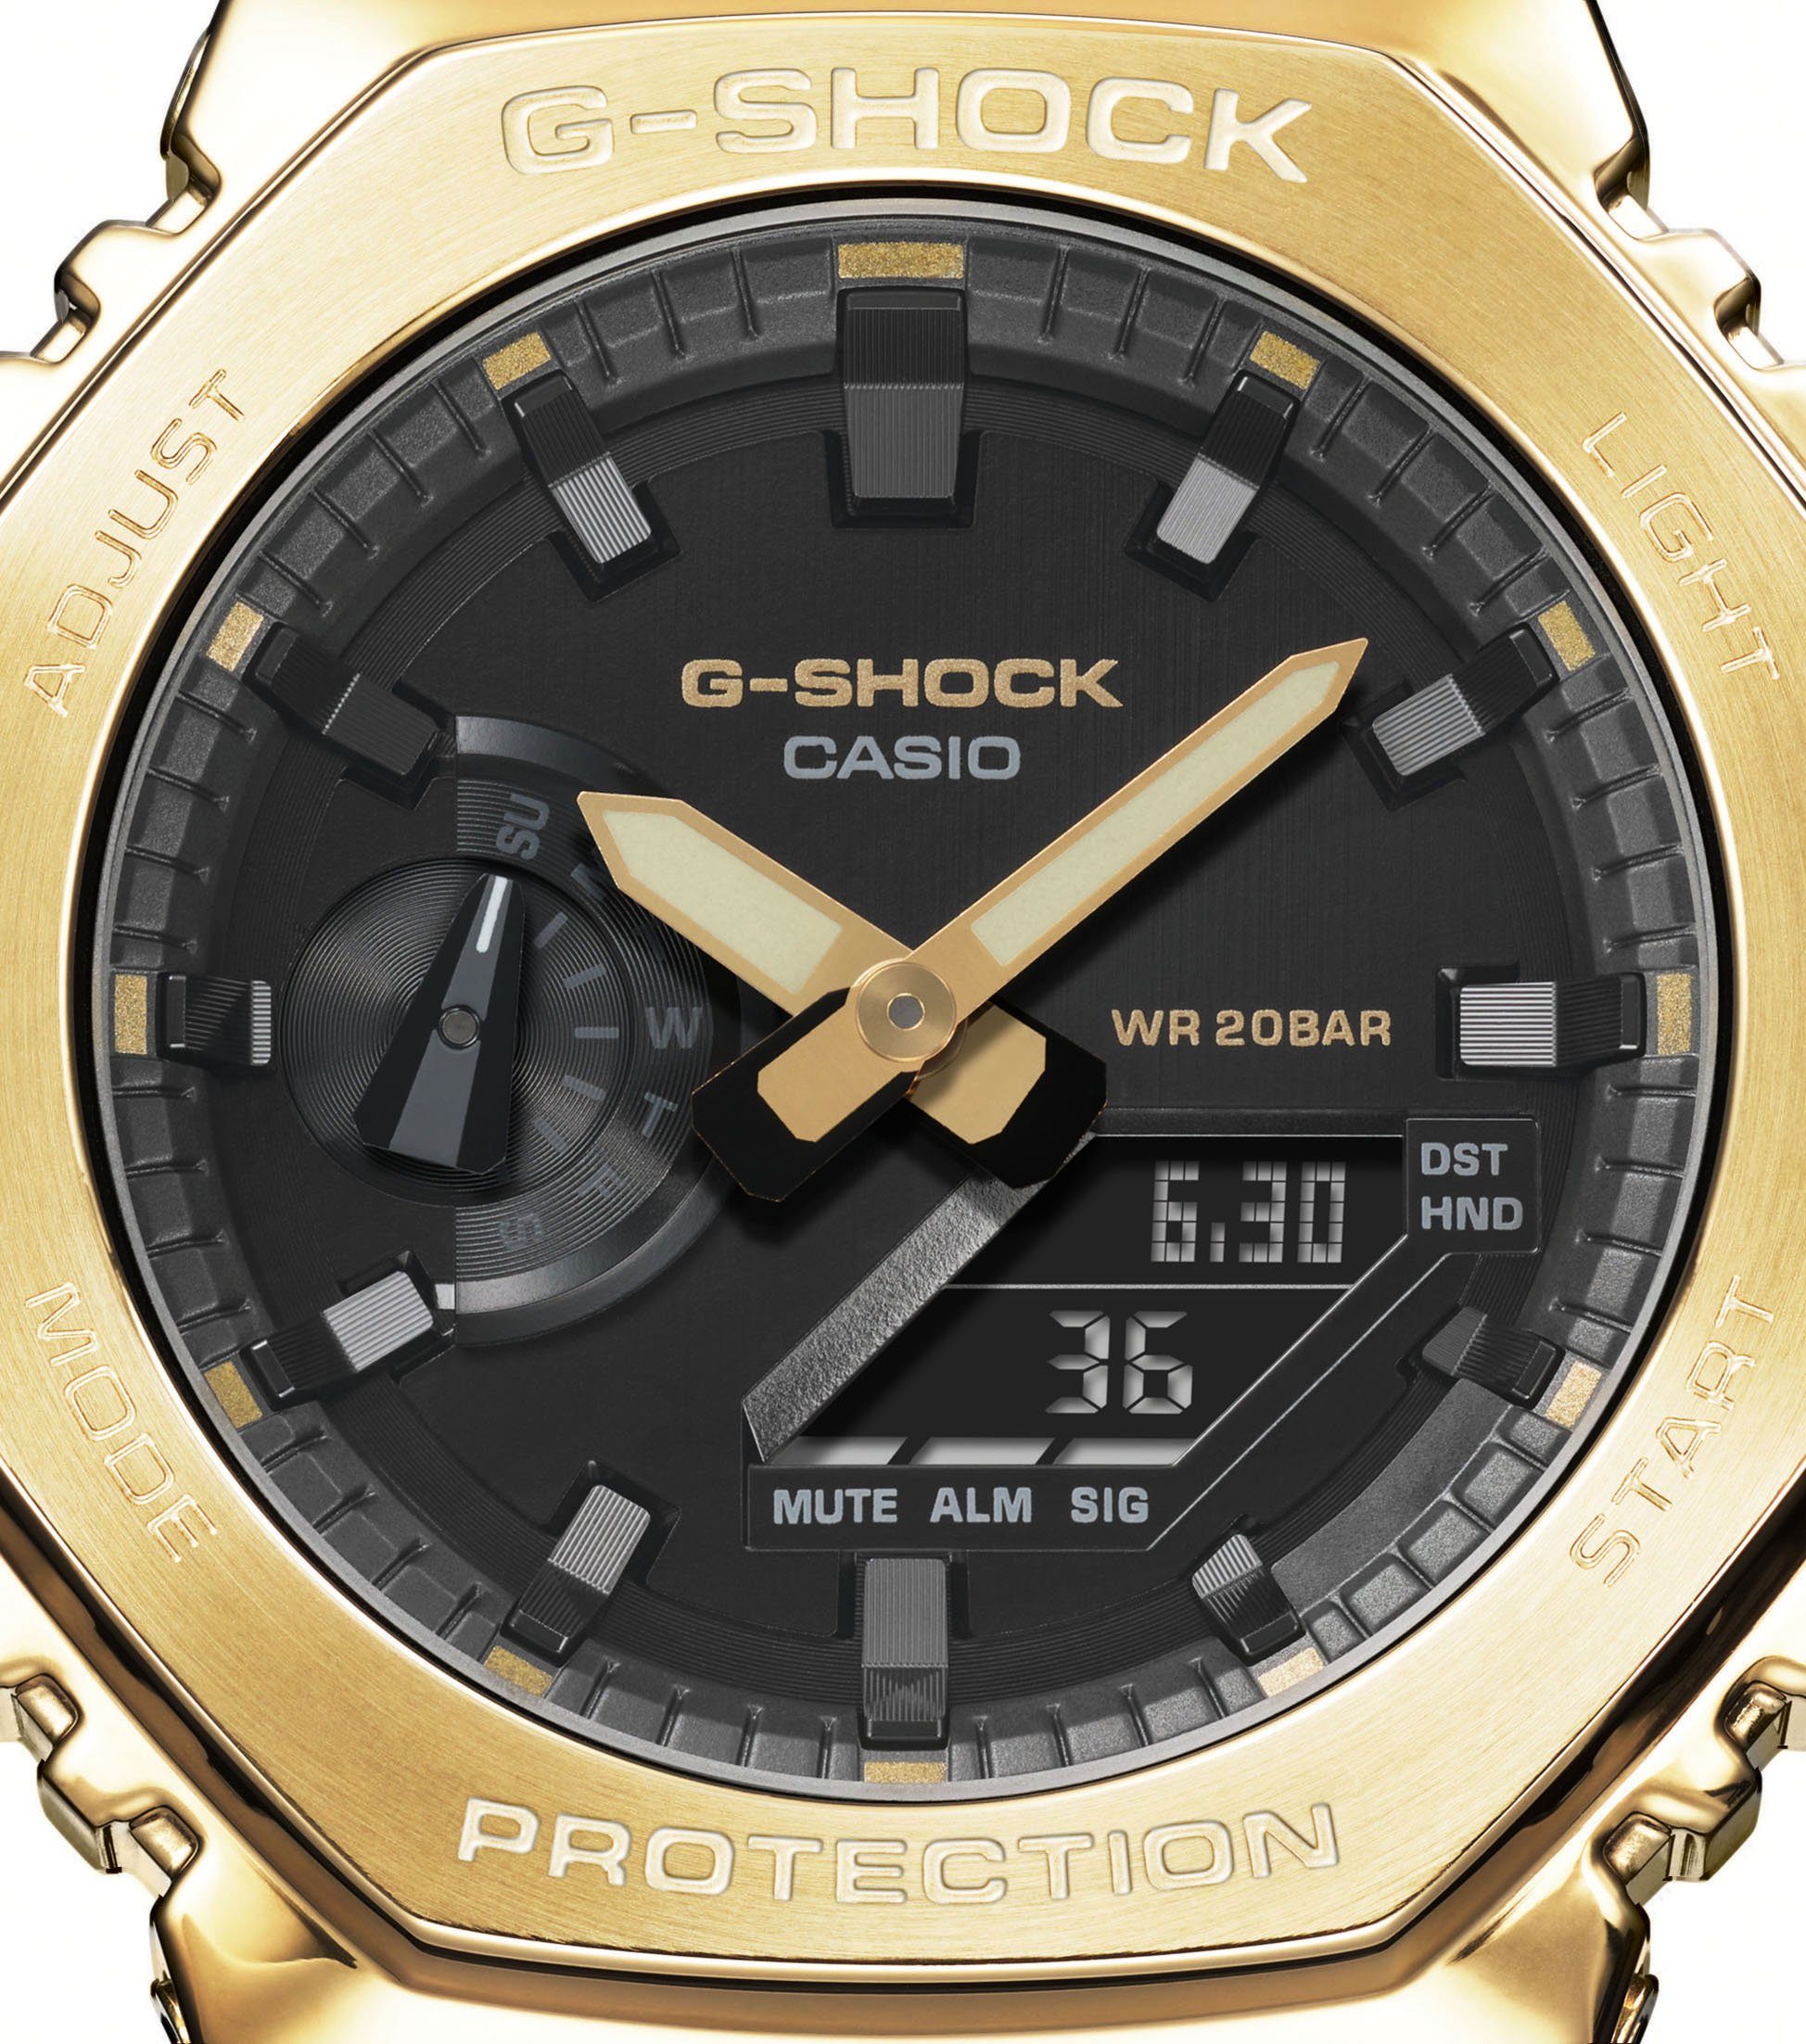 GM-2100G-1A9ER G-SHOCK CASIO Chronograph